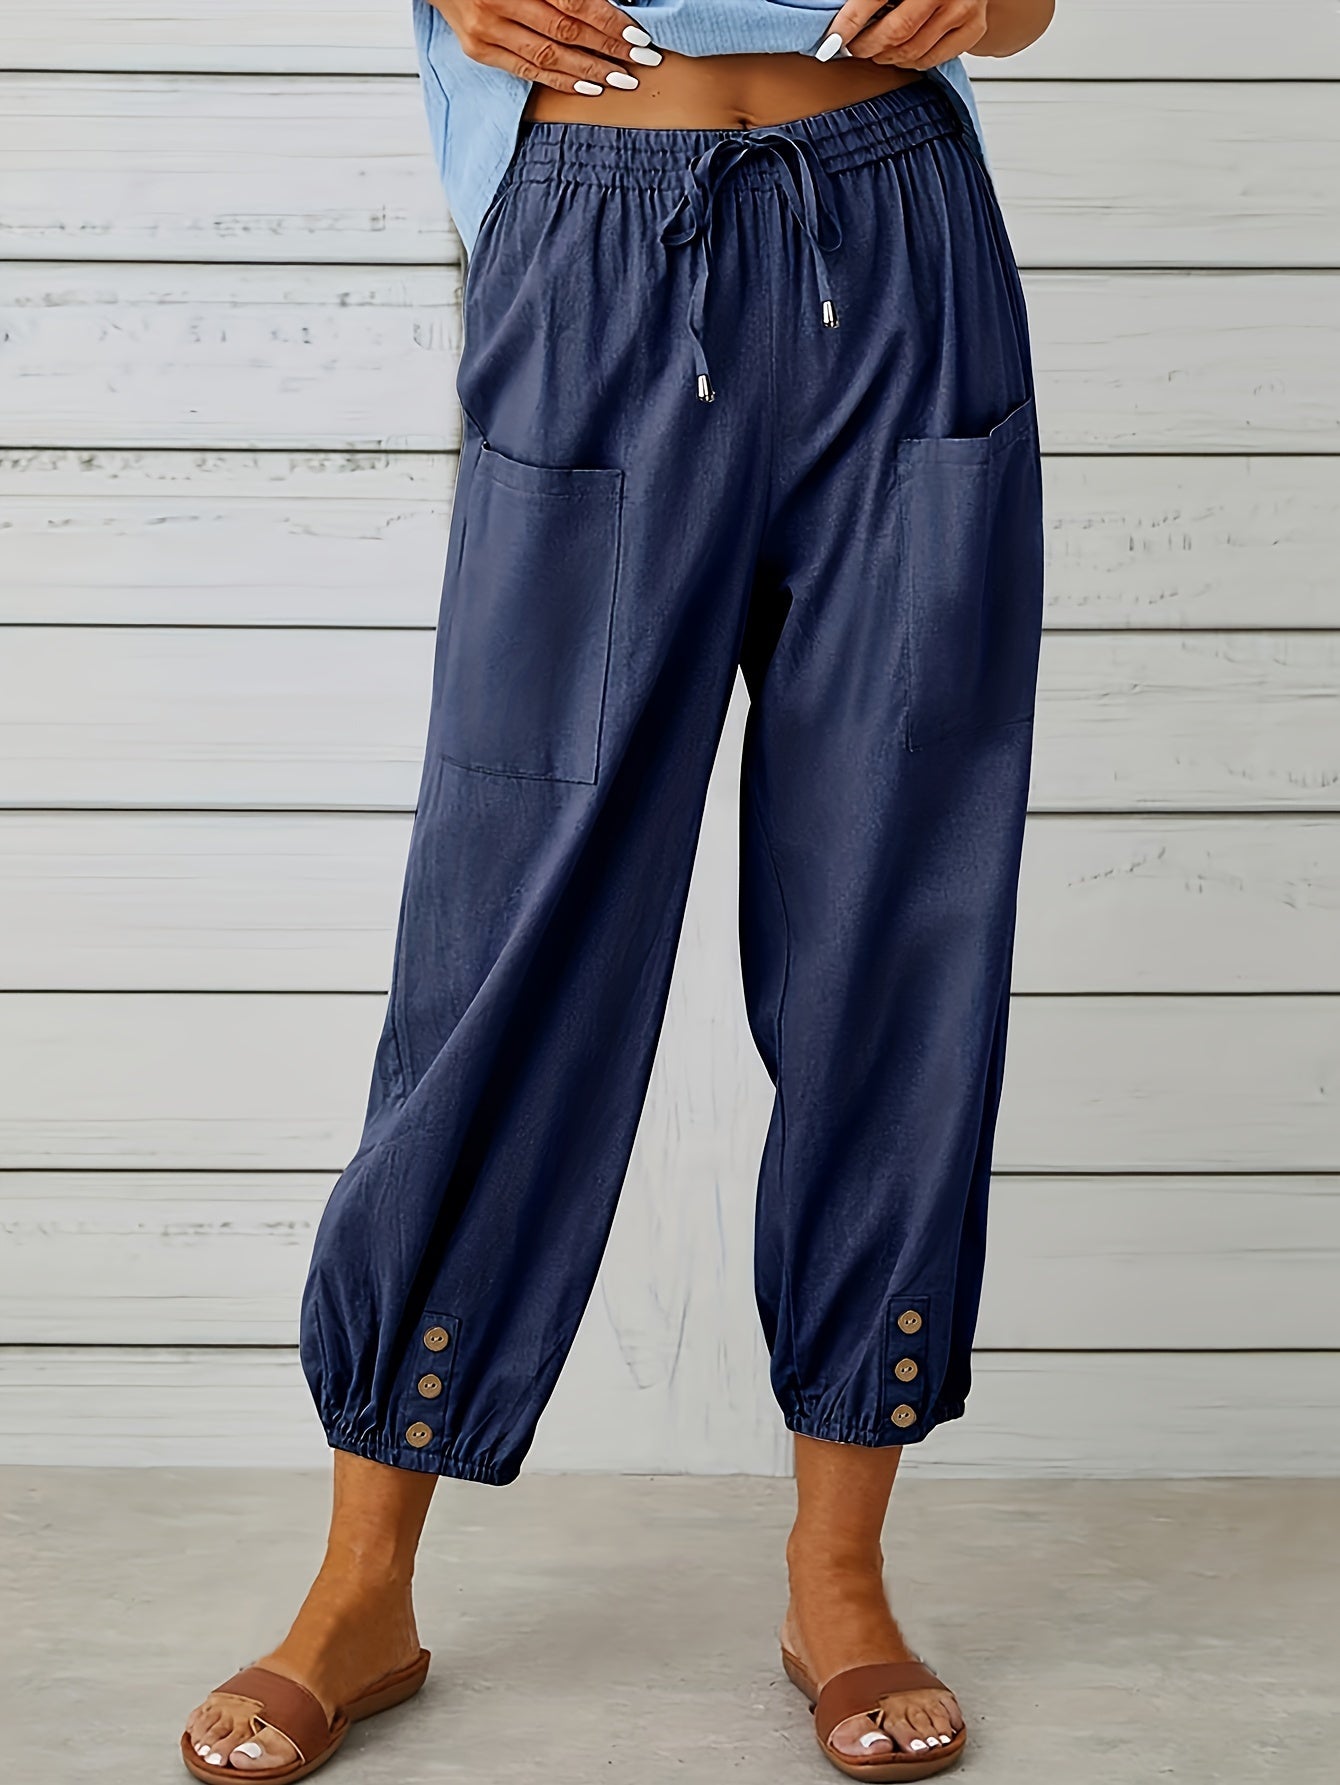 Plus Size Casual Pants, Women's Plus Solid Bow Knot Elastic Button Decor Pants With Pockets